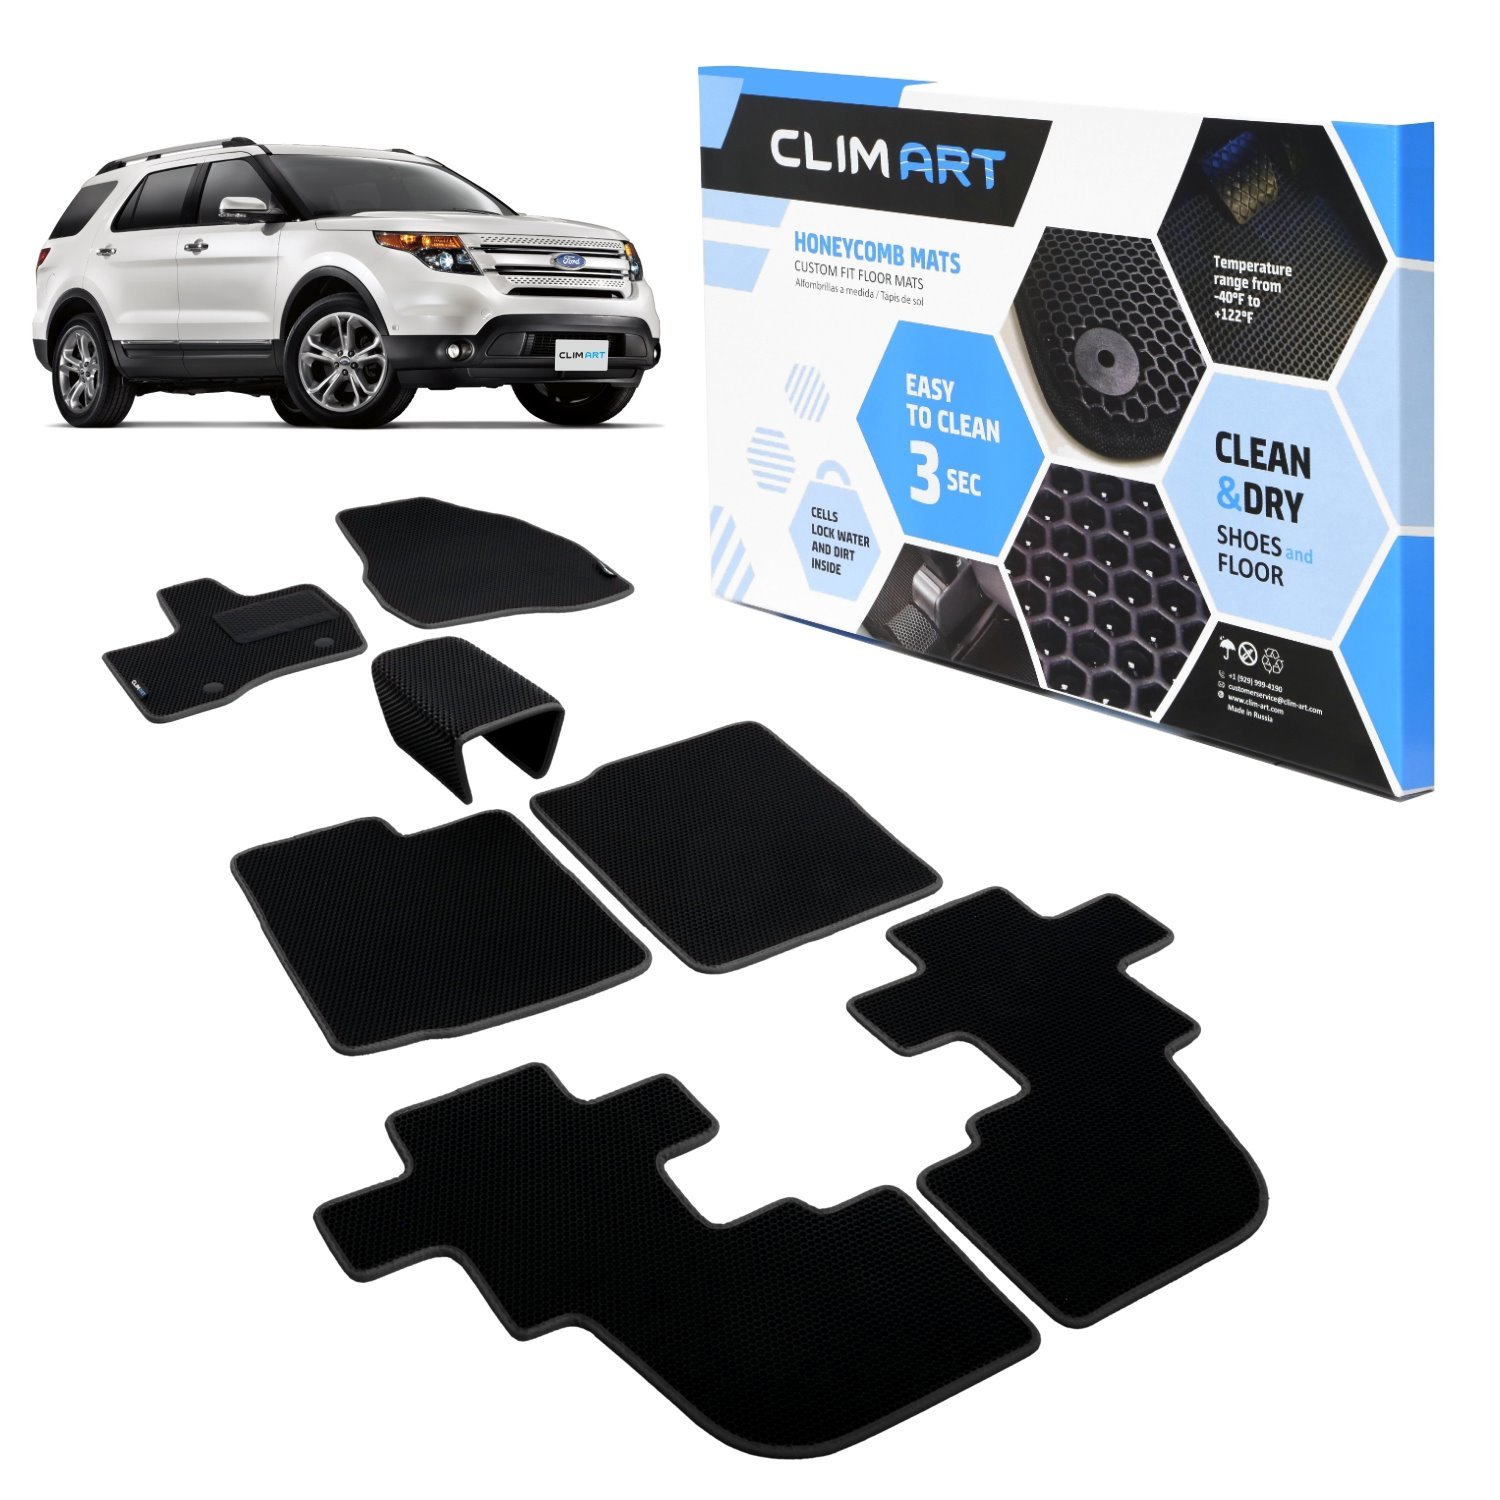 CLIM ART Honeycomb Custom Fit Floor Mats for 2011-2014 Ford Explorer